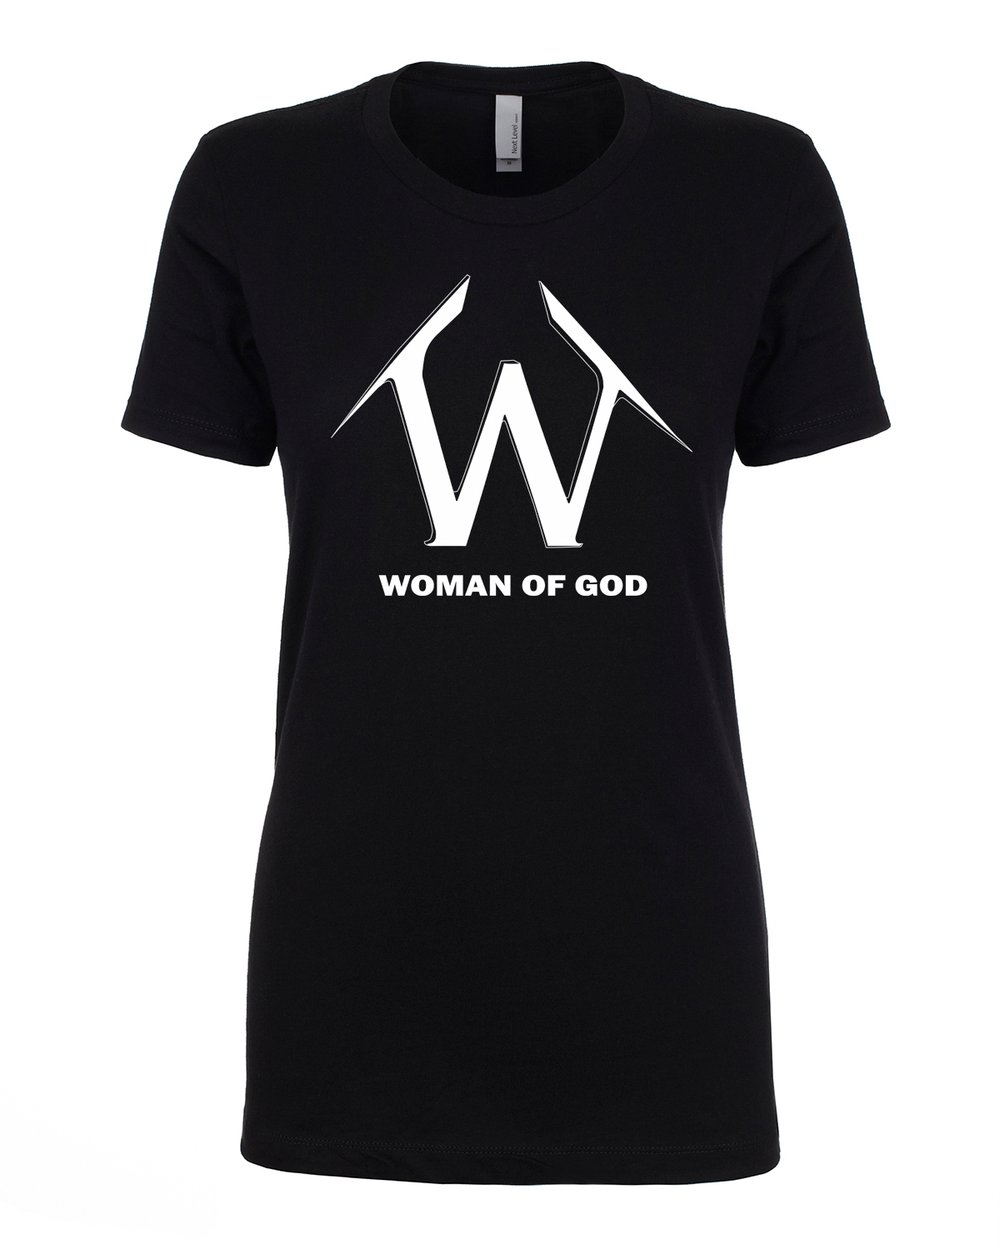 Image of WOMAN OF GOD (Black)